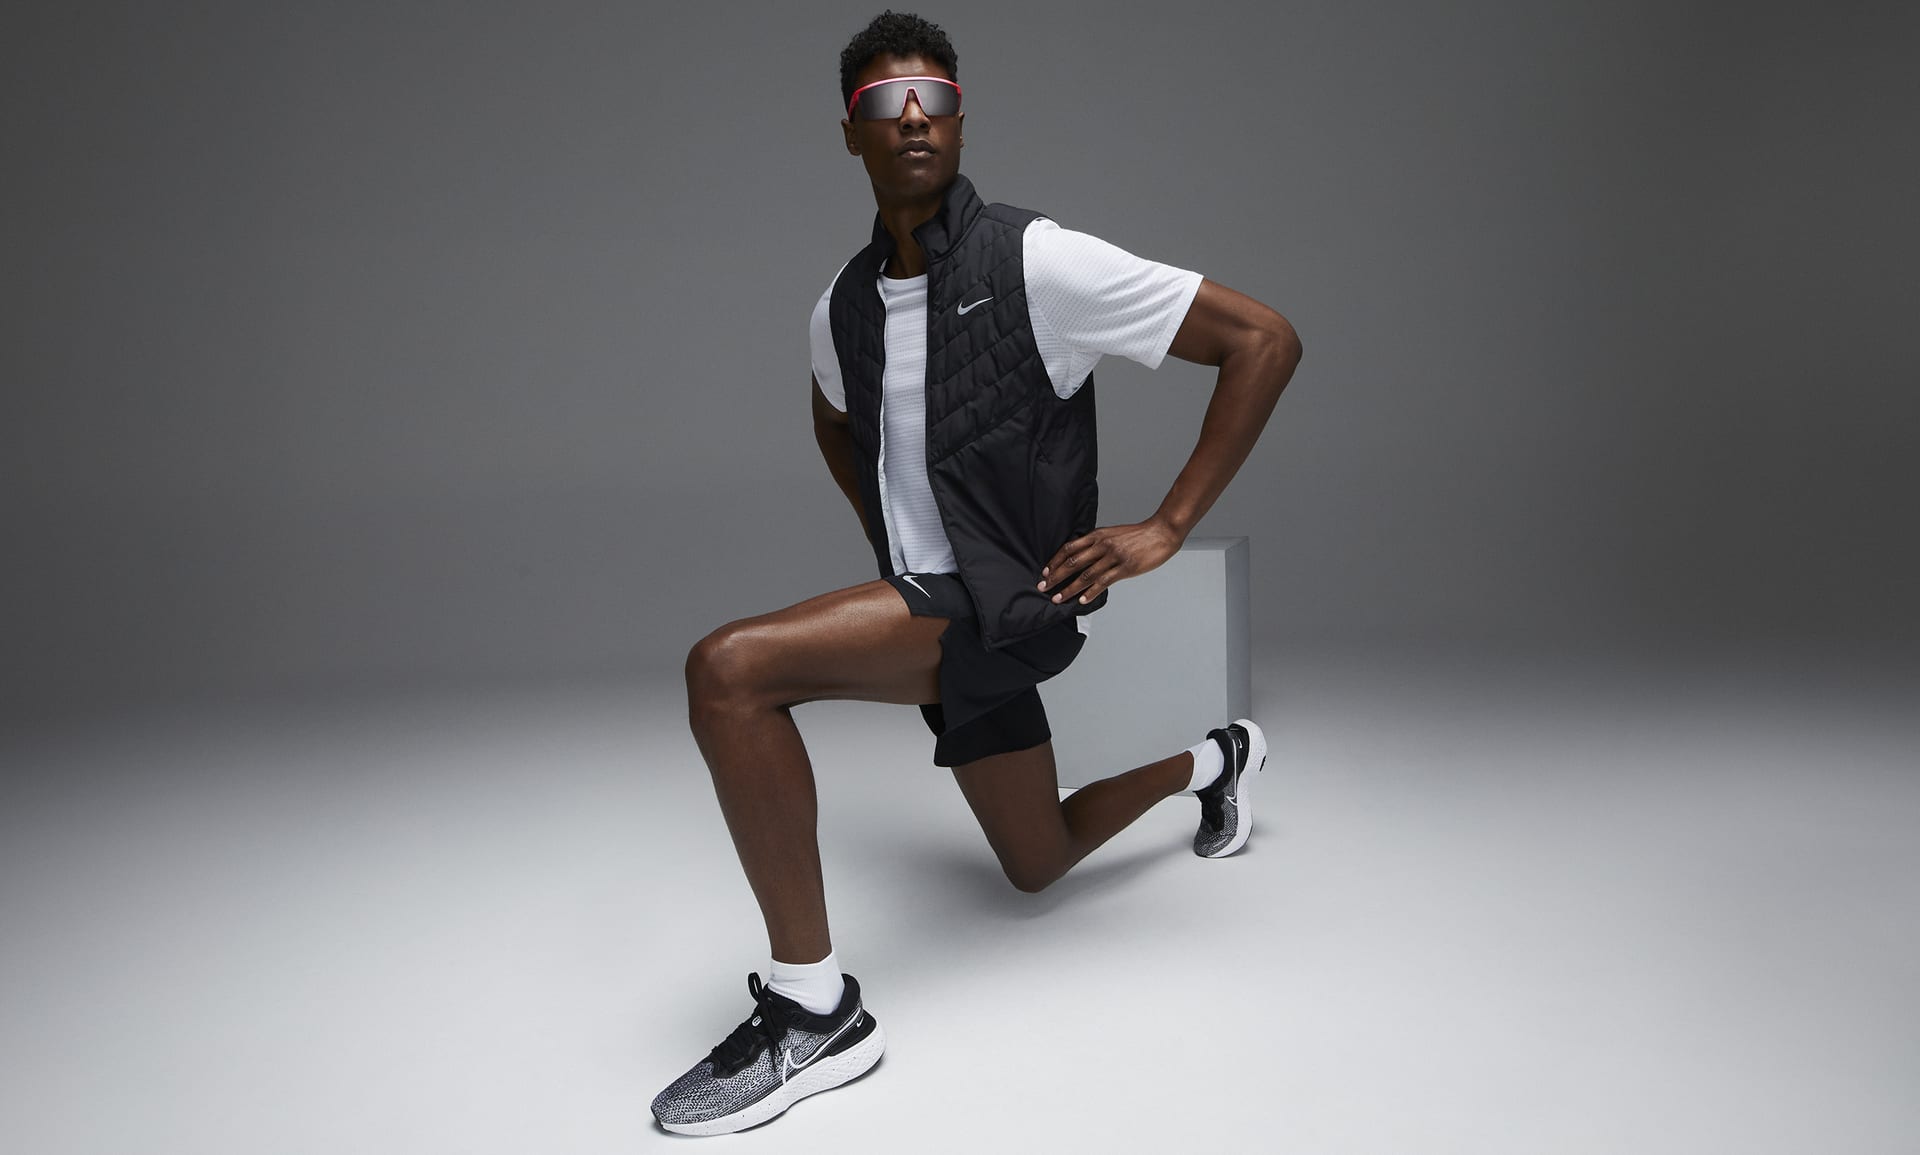 Nike Short Challenger 7 Homme Noir- JD Sports France